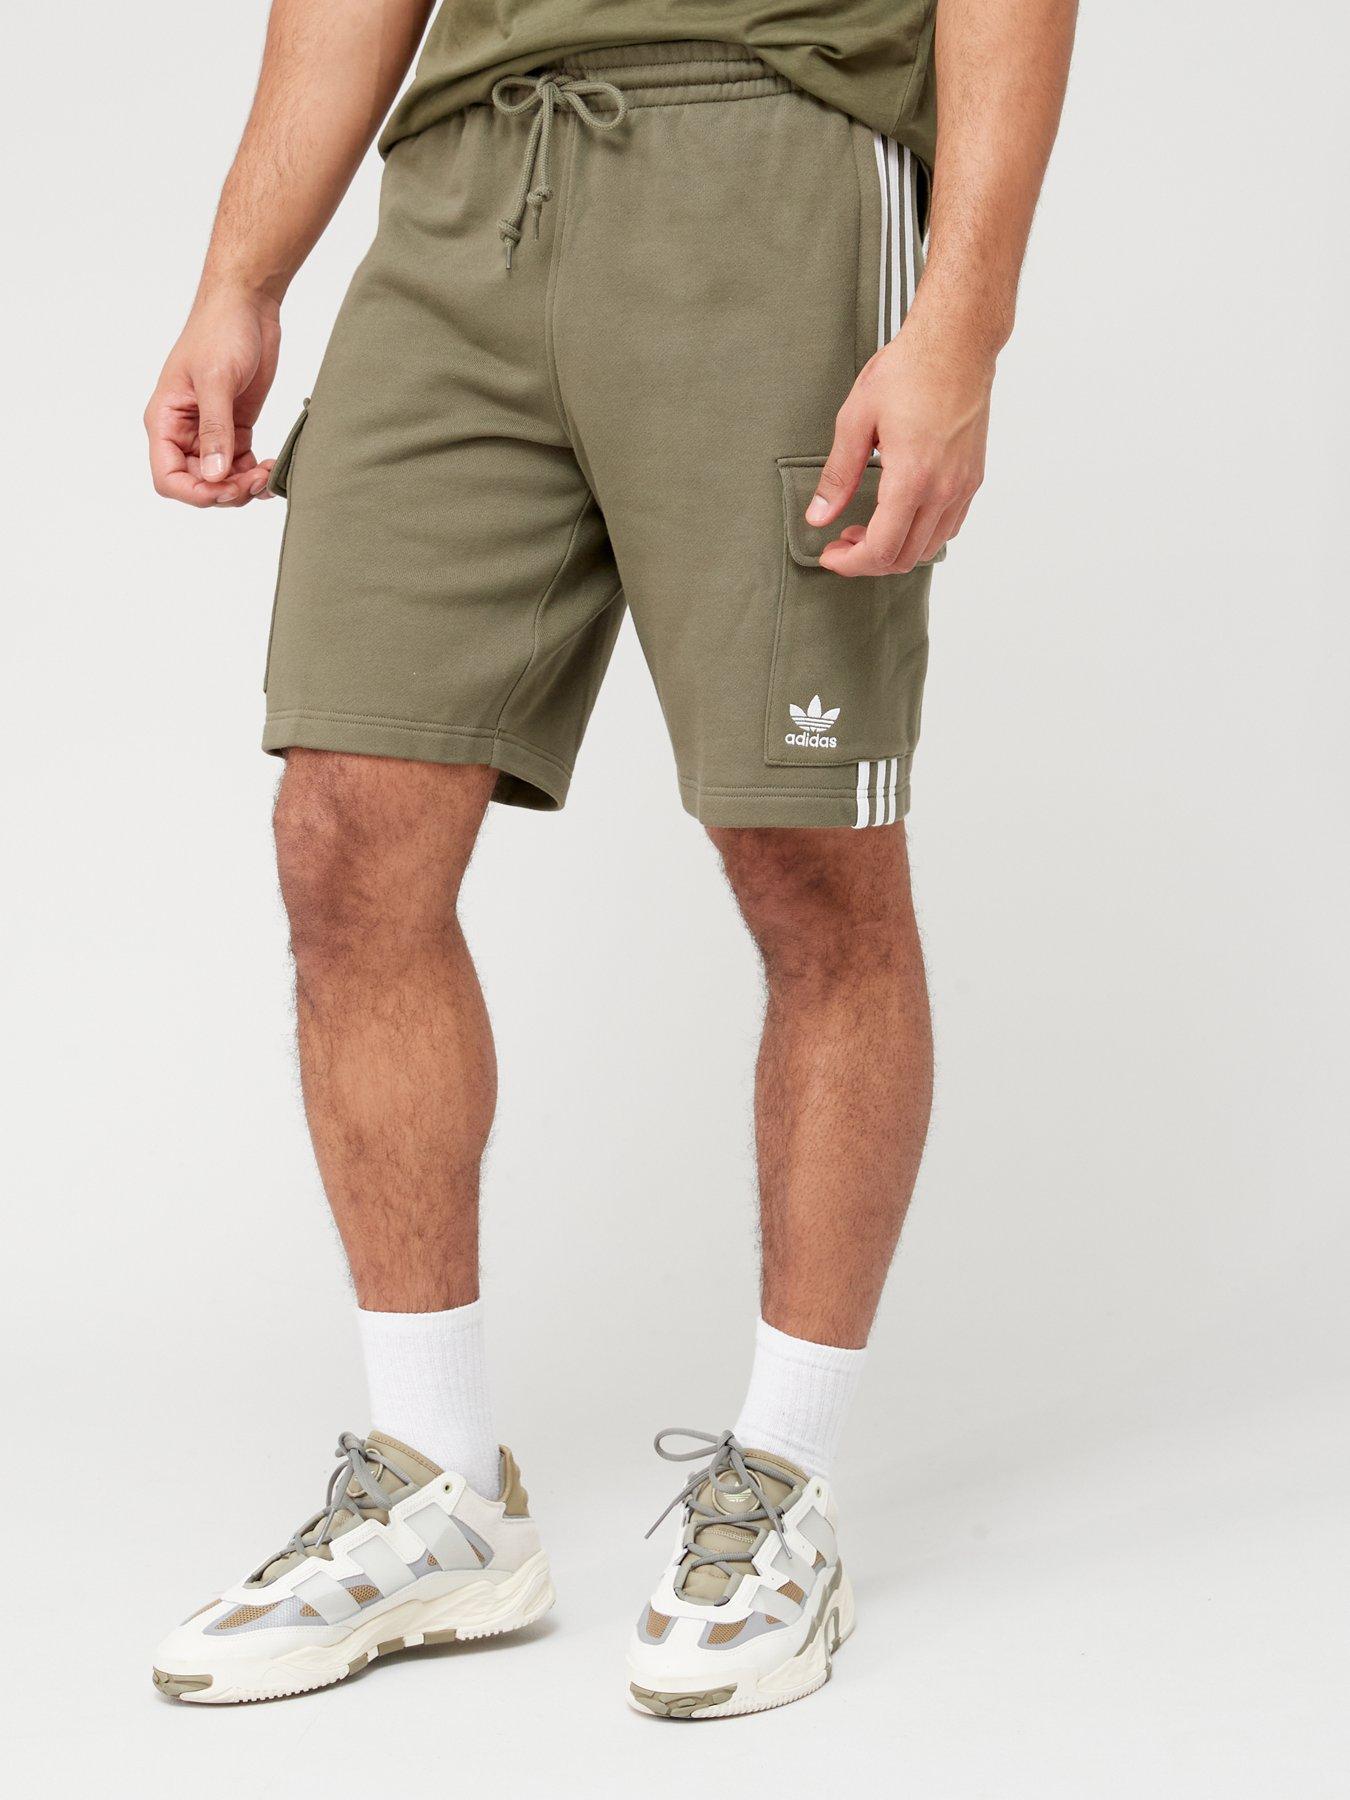 Ireland Very originals Adidas | Shorts | Men |